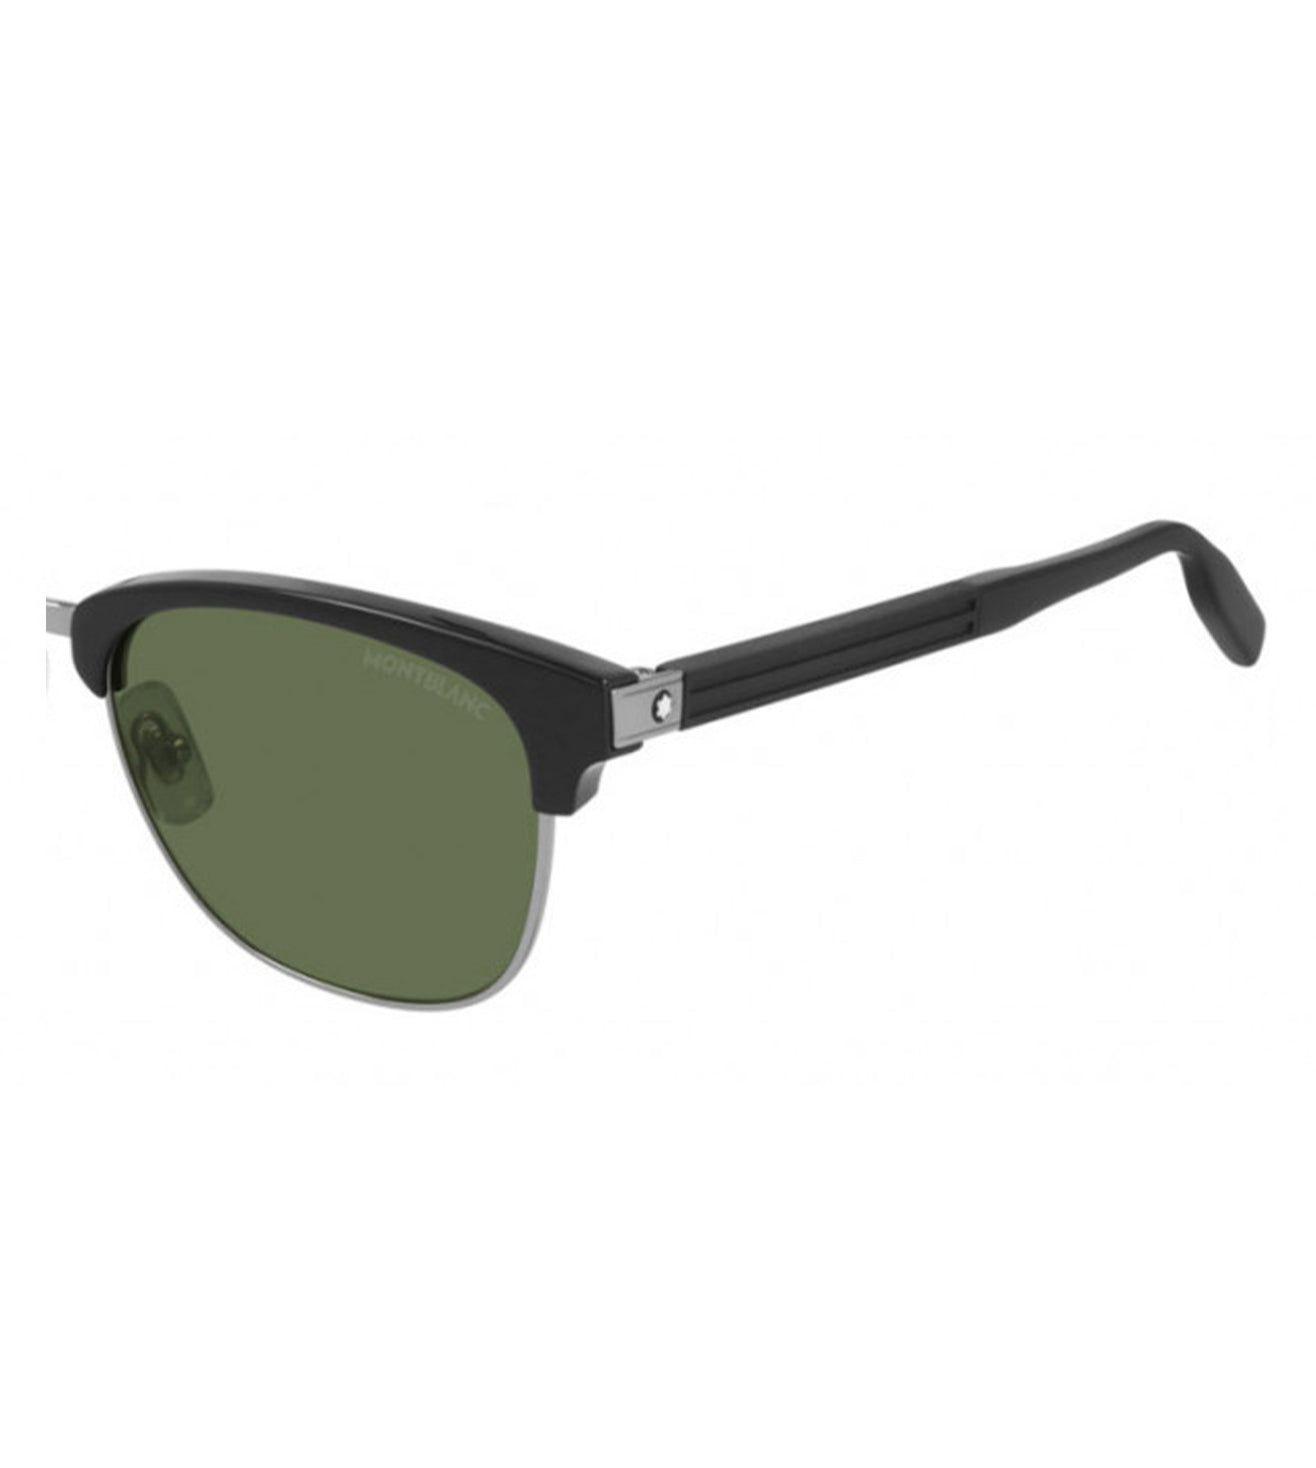 Montblanc Men's Green Rectangular Sunglasses